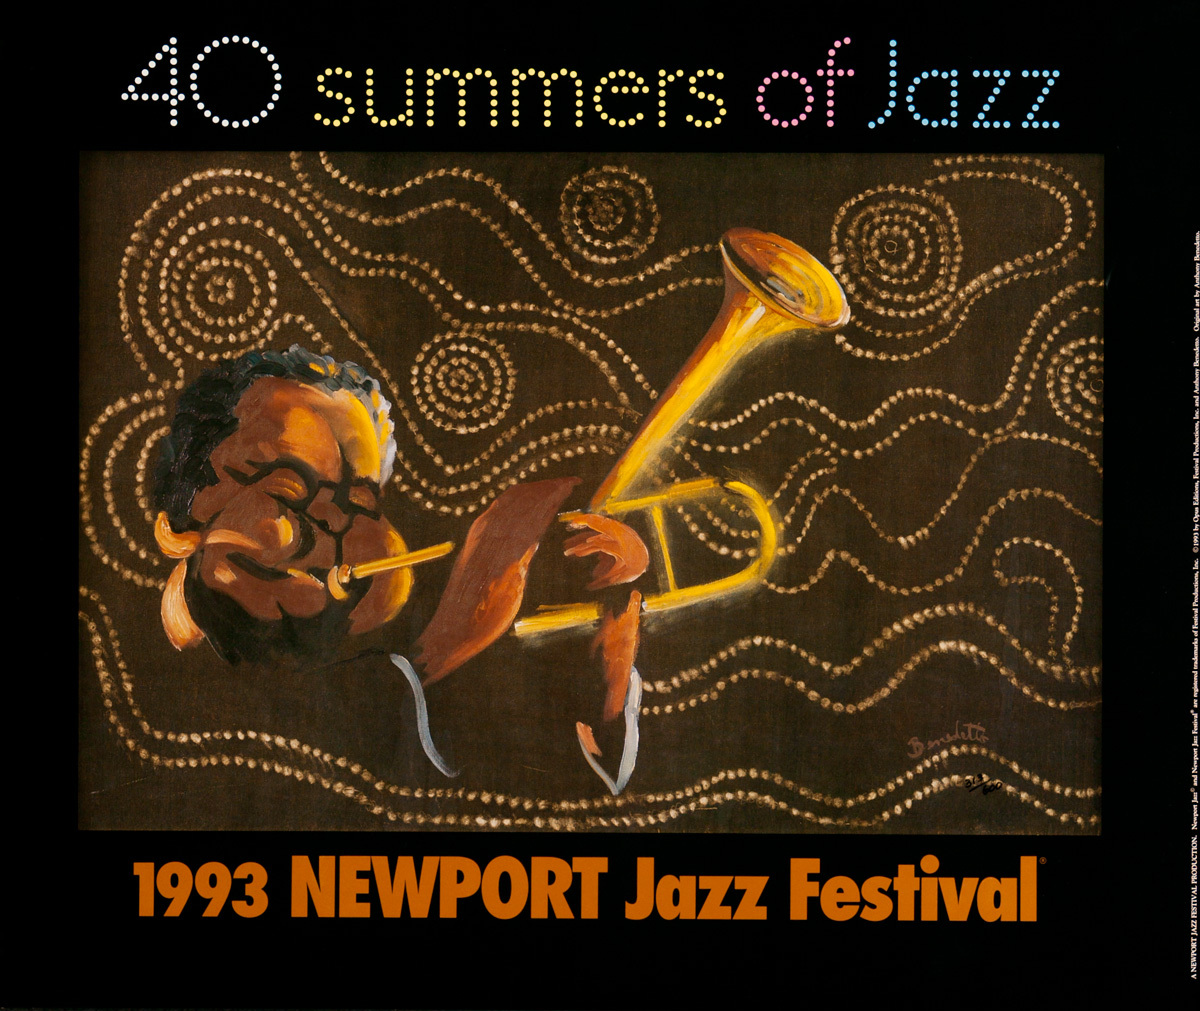 Newport Jazz Festival Original Concert Poster, 1993